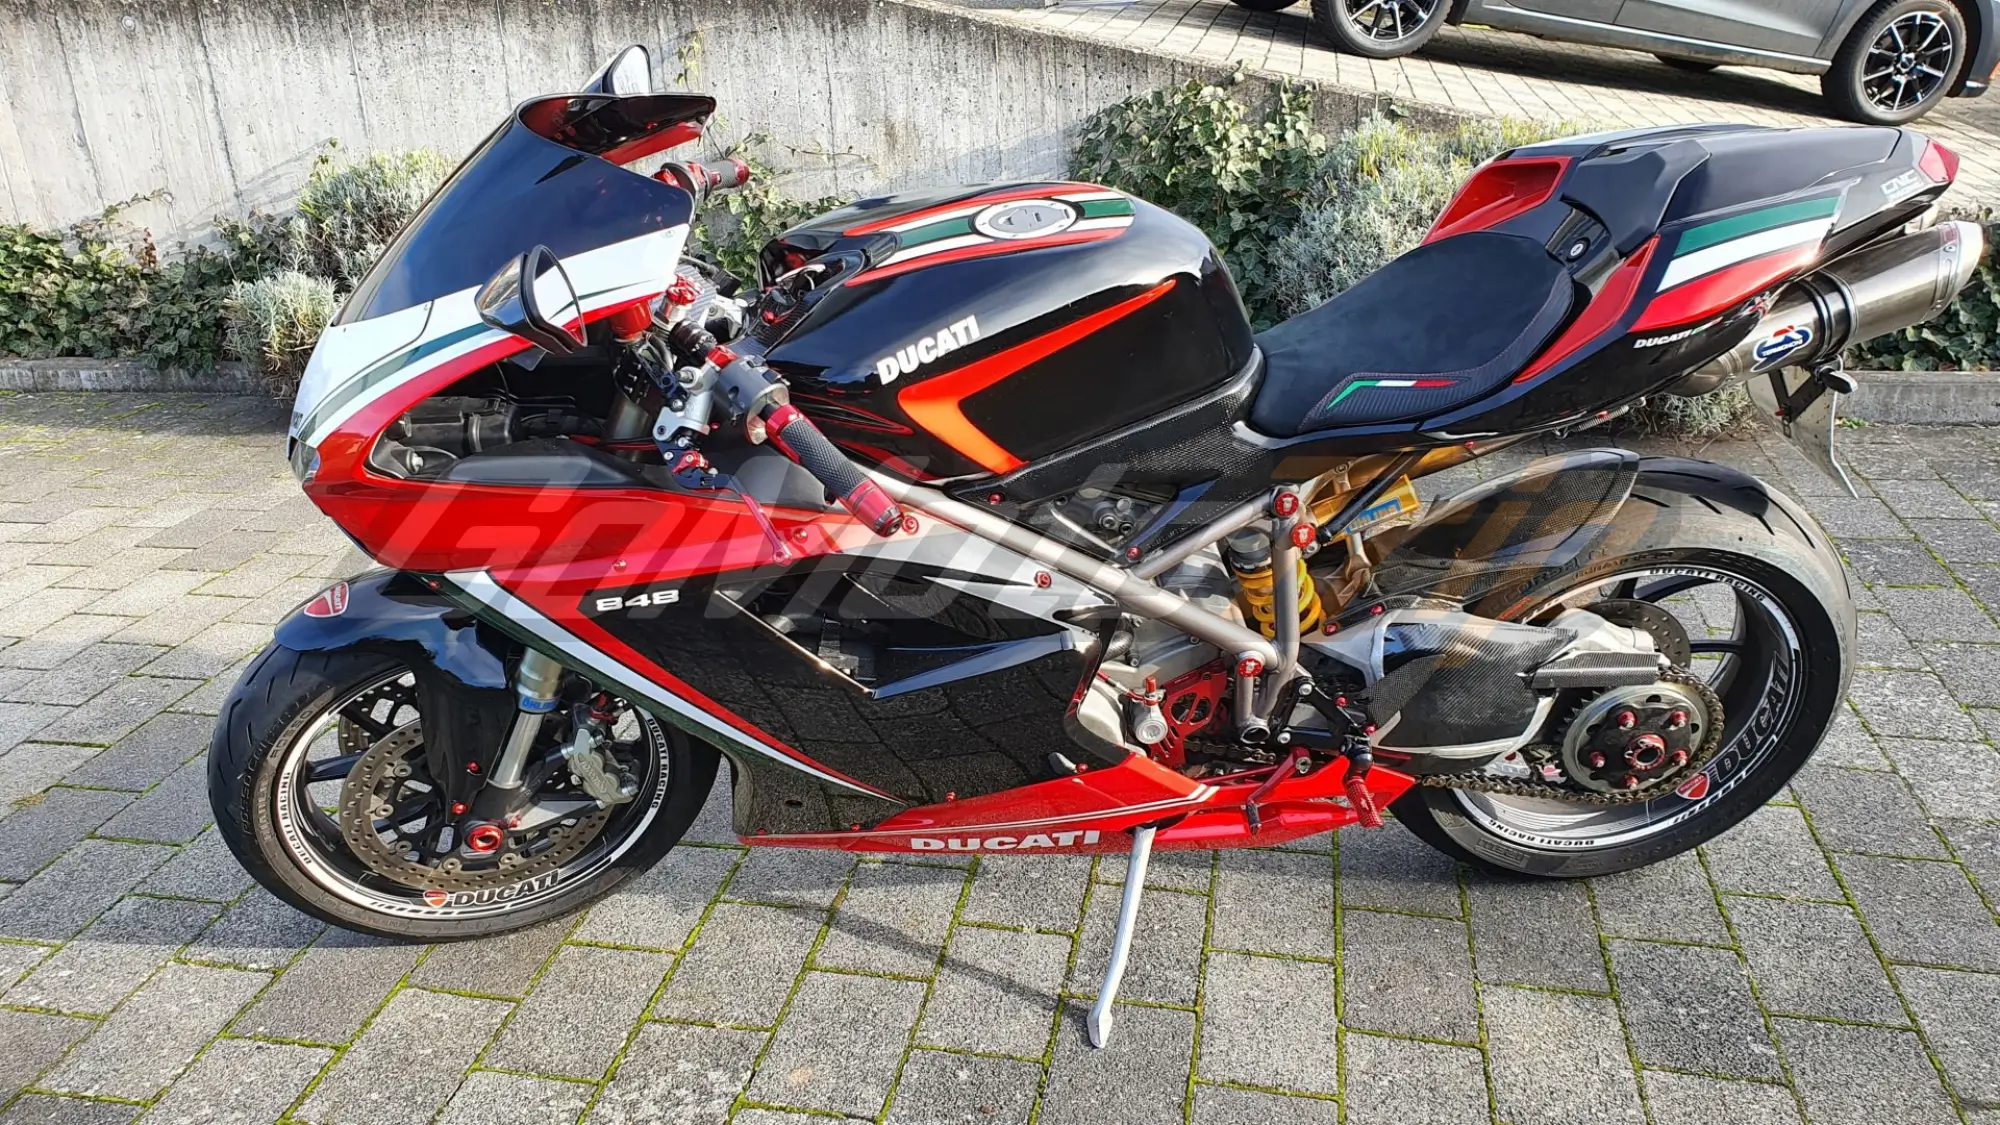 Rider-Review-93849-Ducati-848-Fairing-1